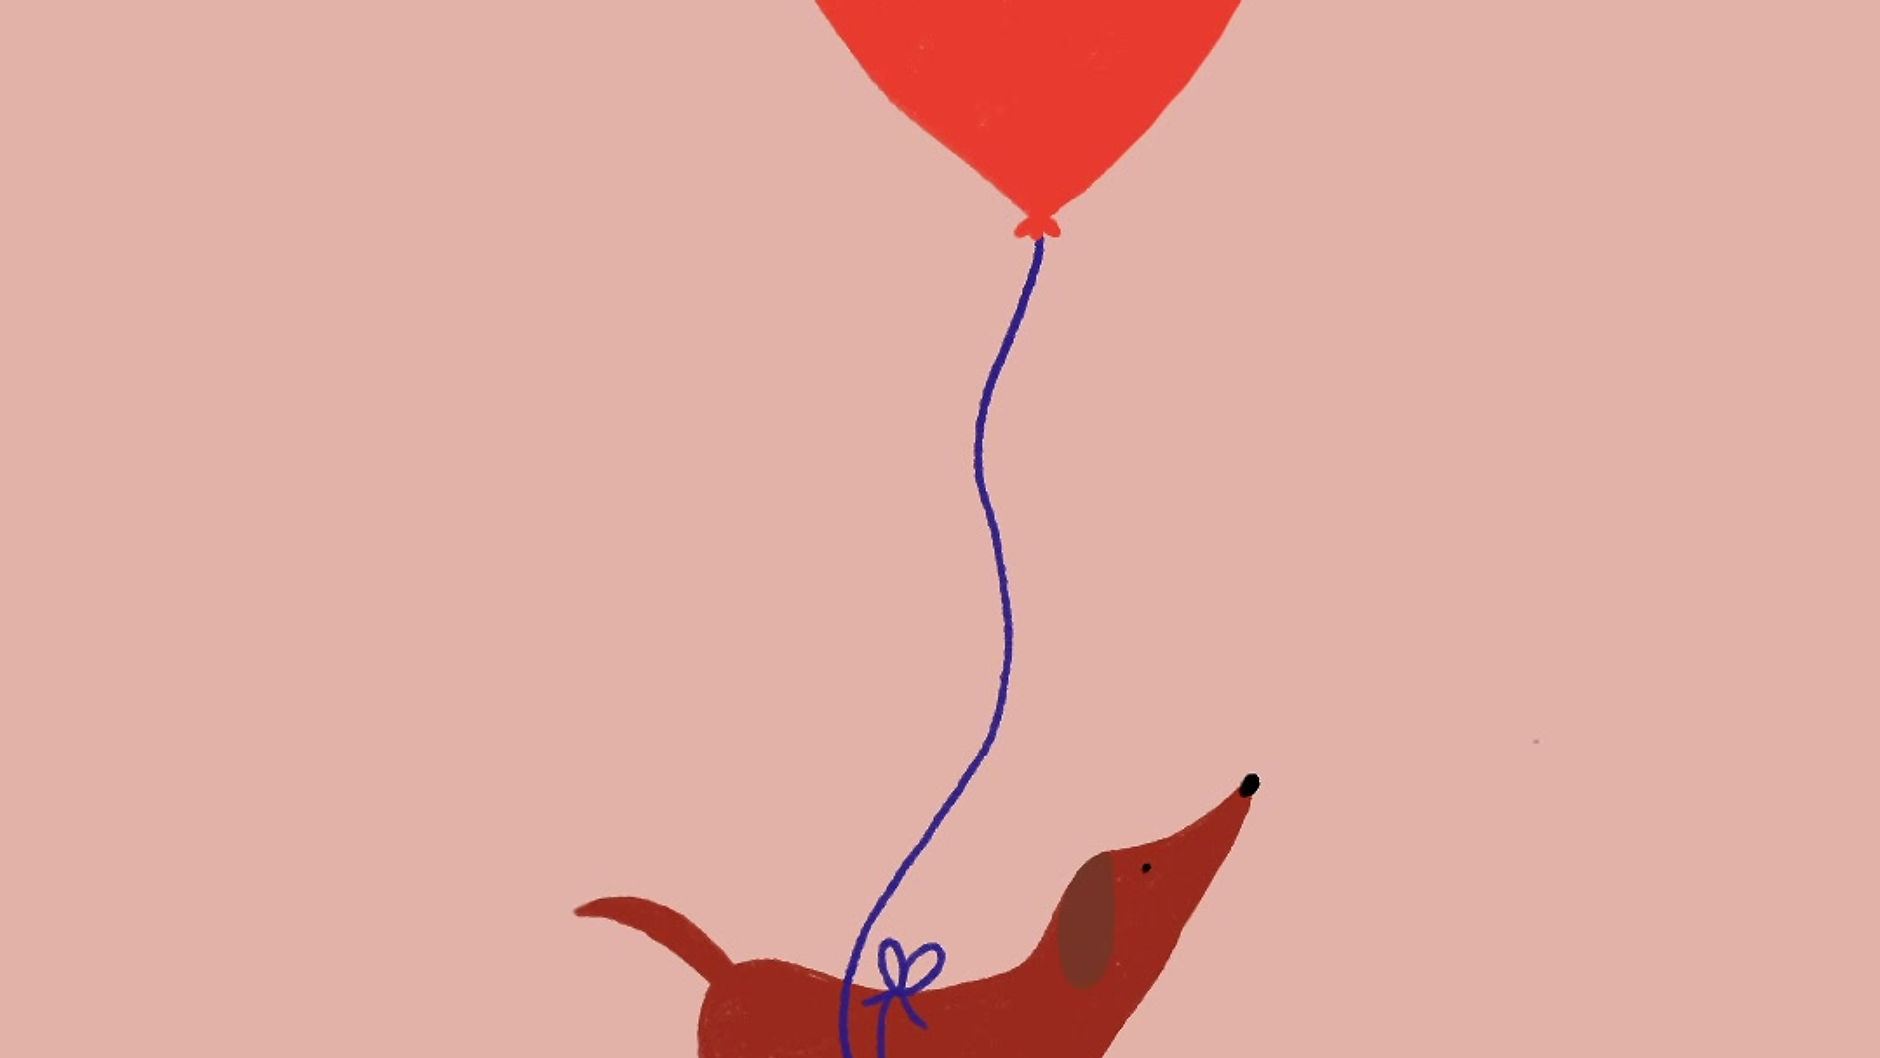 Dog_sausage dog balloon